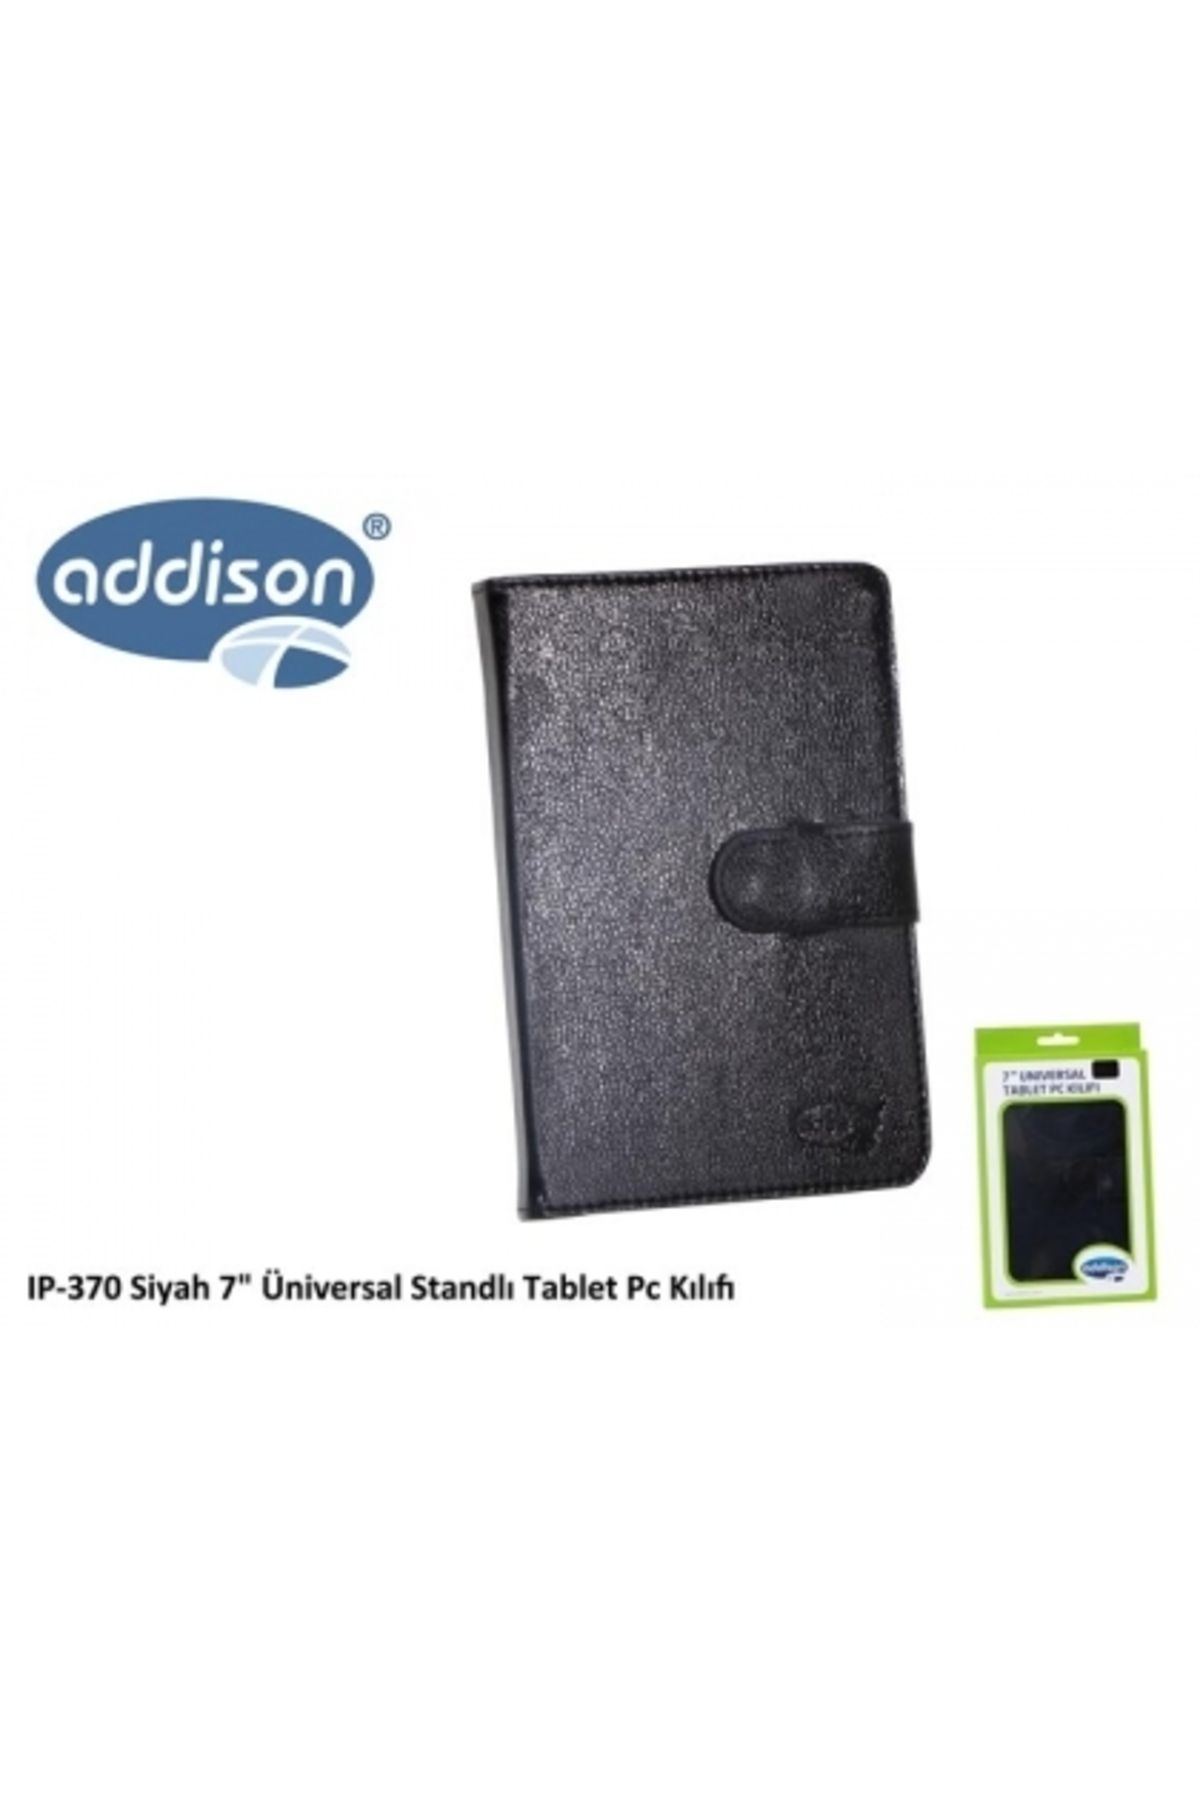 Addison IP-370 SİYAH 7'' ÜNİVERSAL STANDLI TABLET PC KILIFI